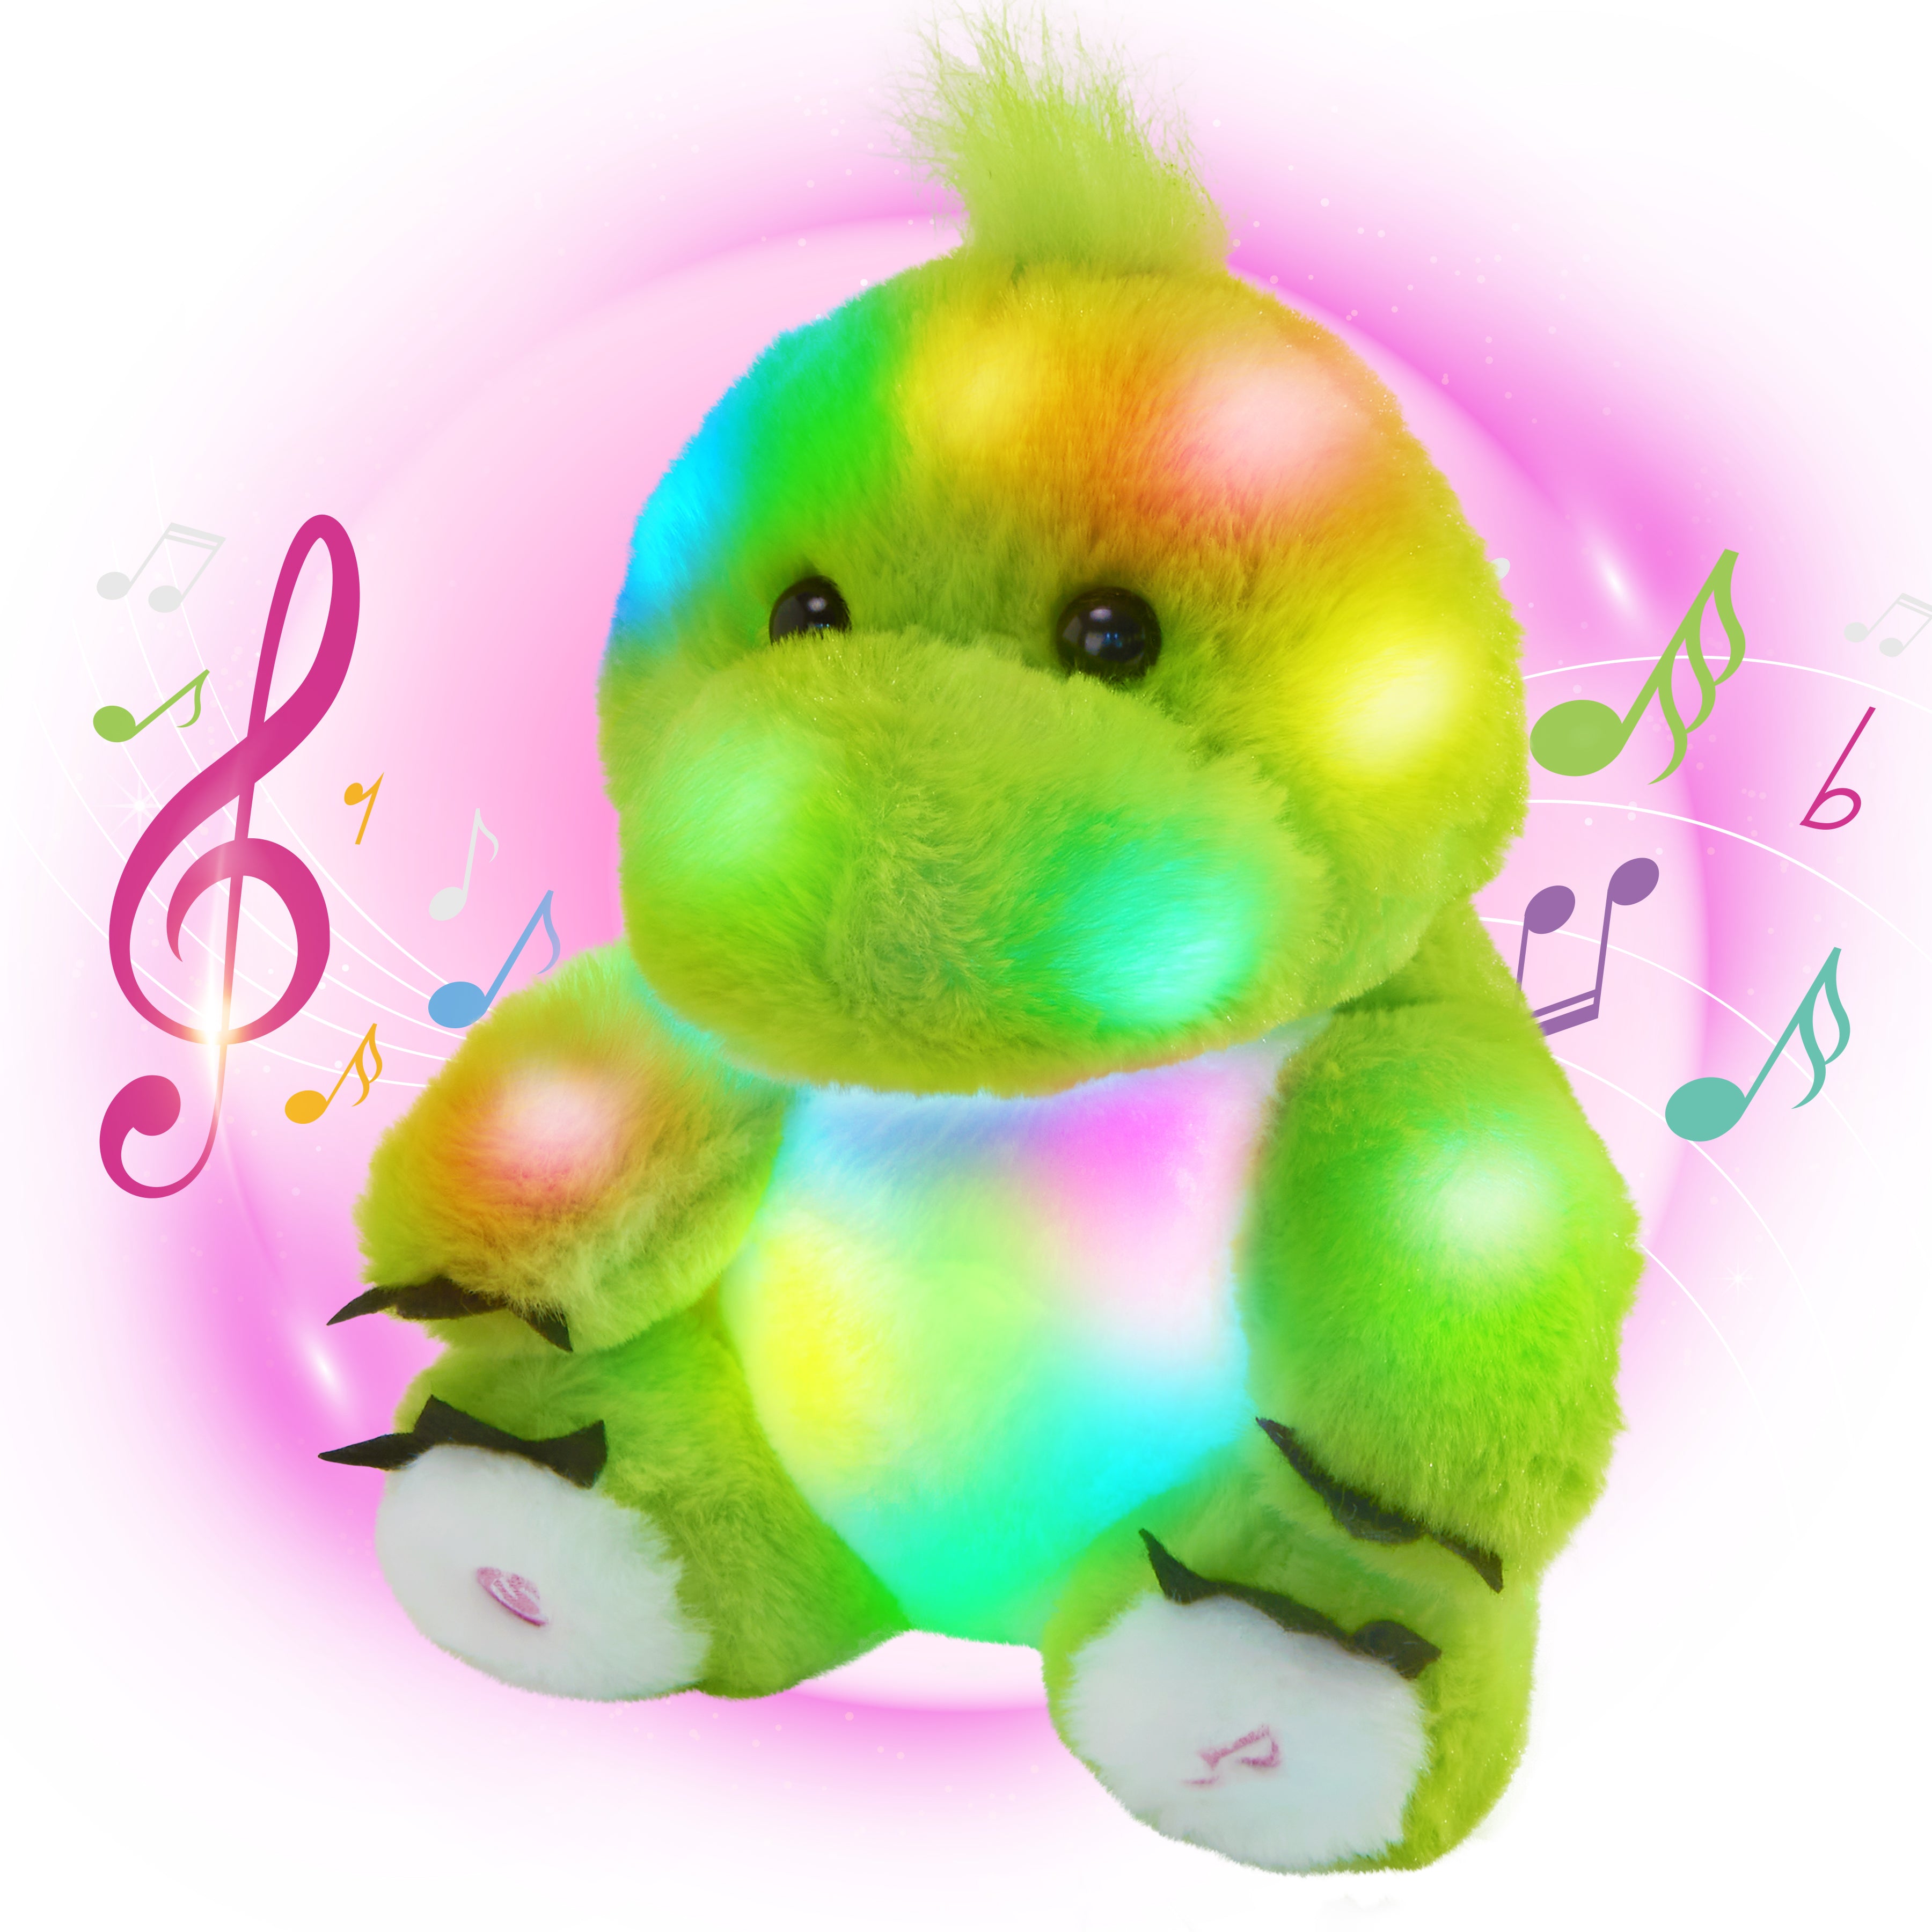 Bstaofy Musical Light Up Dinosaur Stuffed Animal Glow Green - Glow Guards